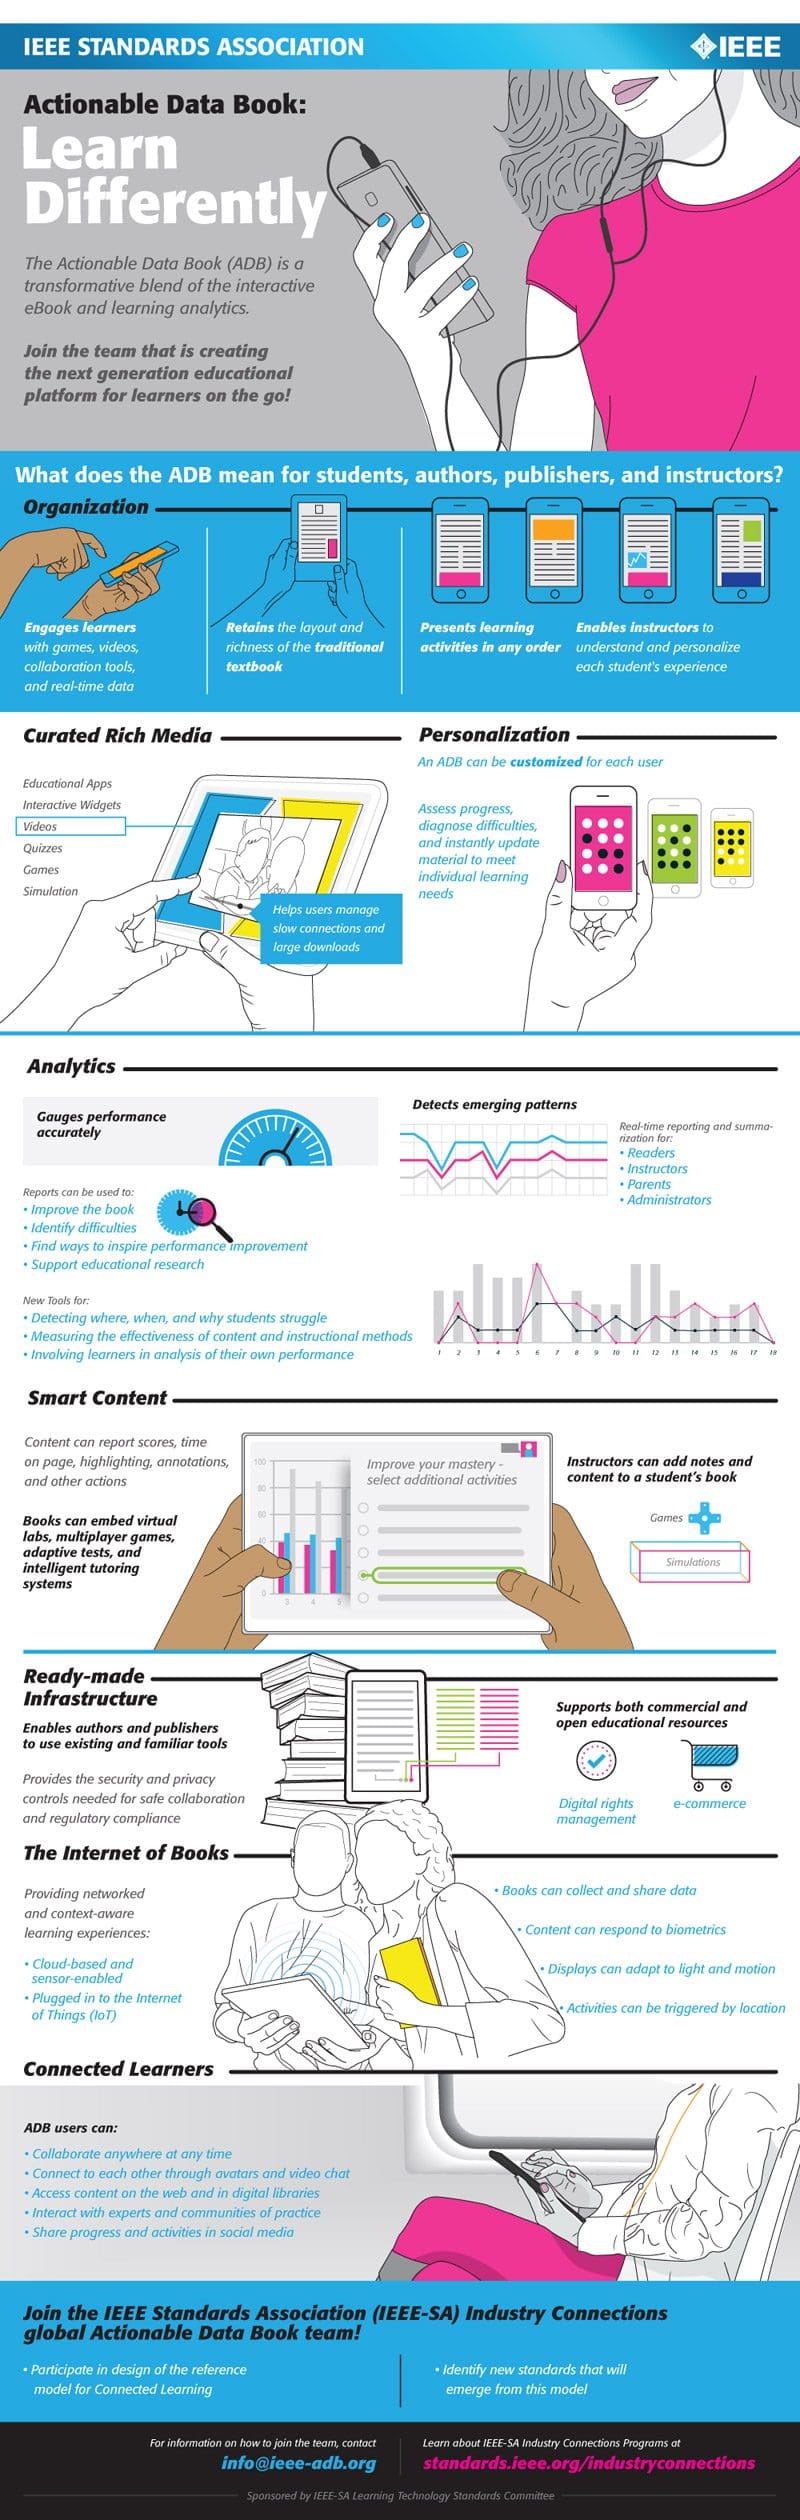 Actionable Data Book (ADB) Infographic